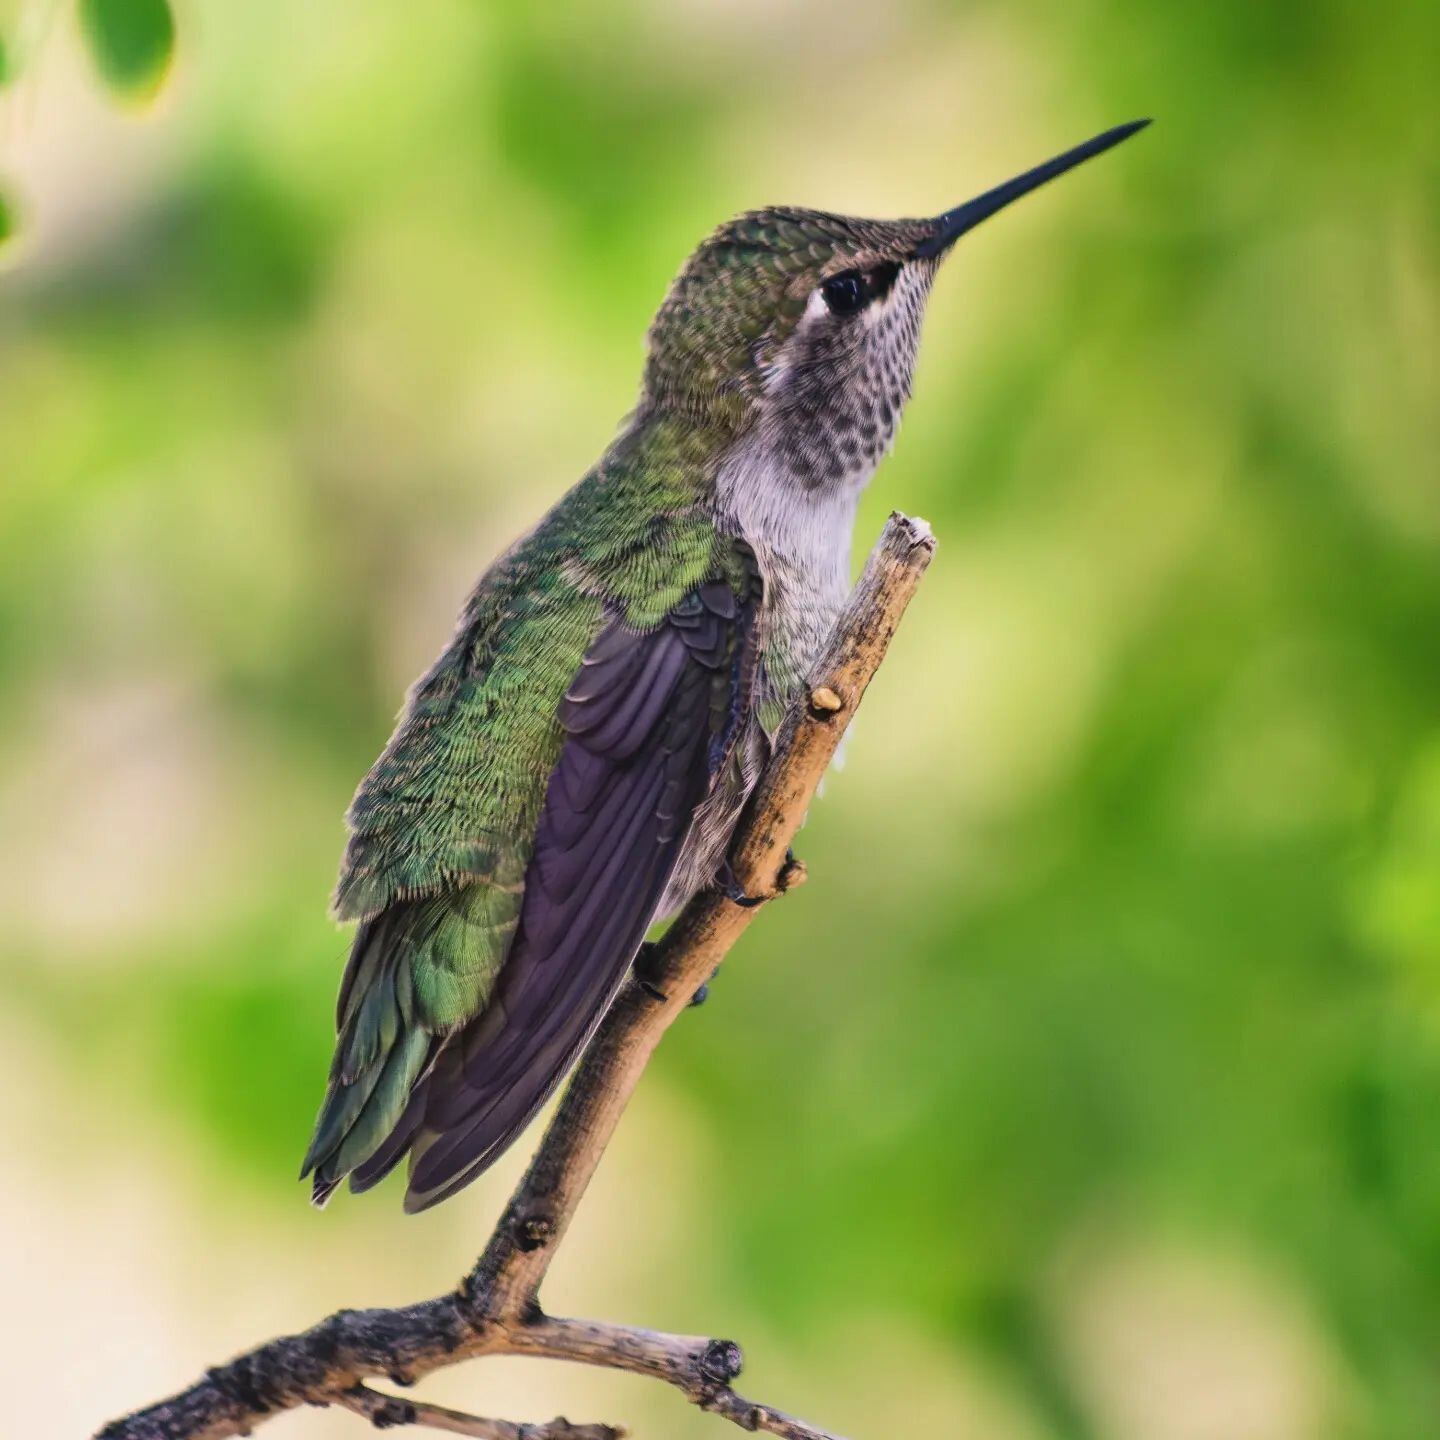 #hummingbird #annashummingbird #birdphotography #pentax #pentaxk1 #teampentax #nature #wildlife #birds #arizona #green